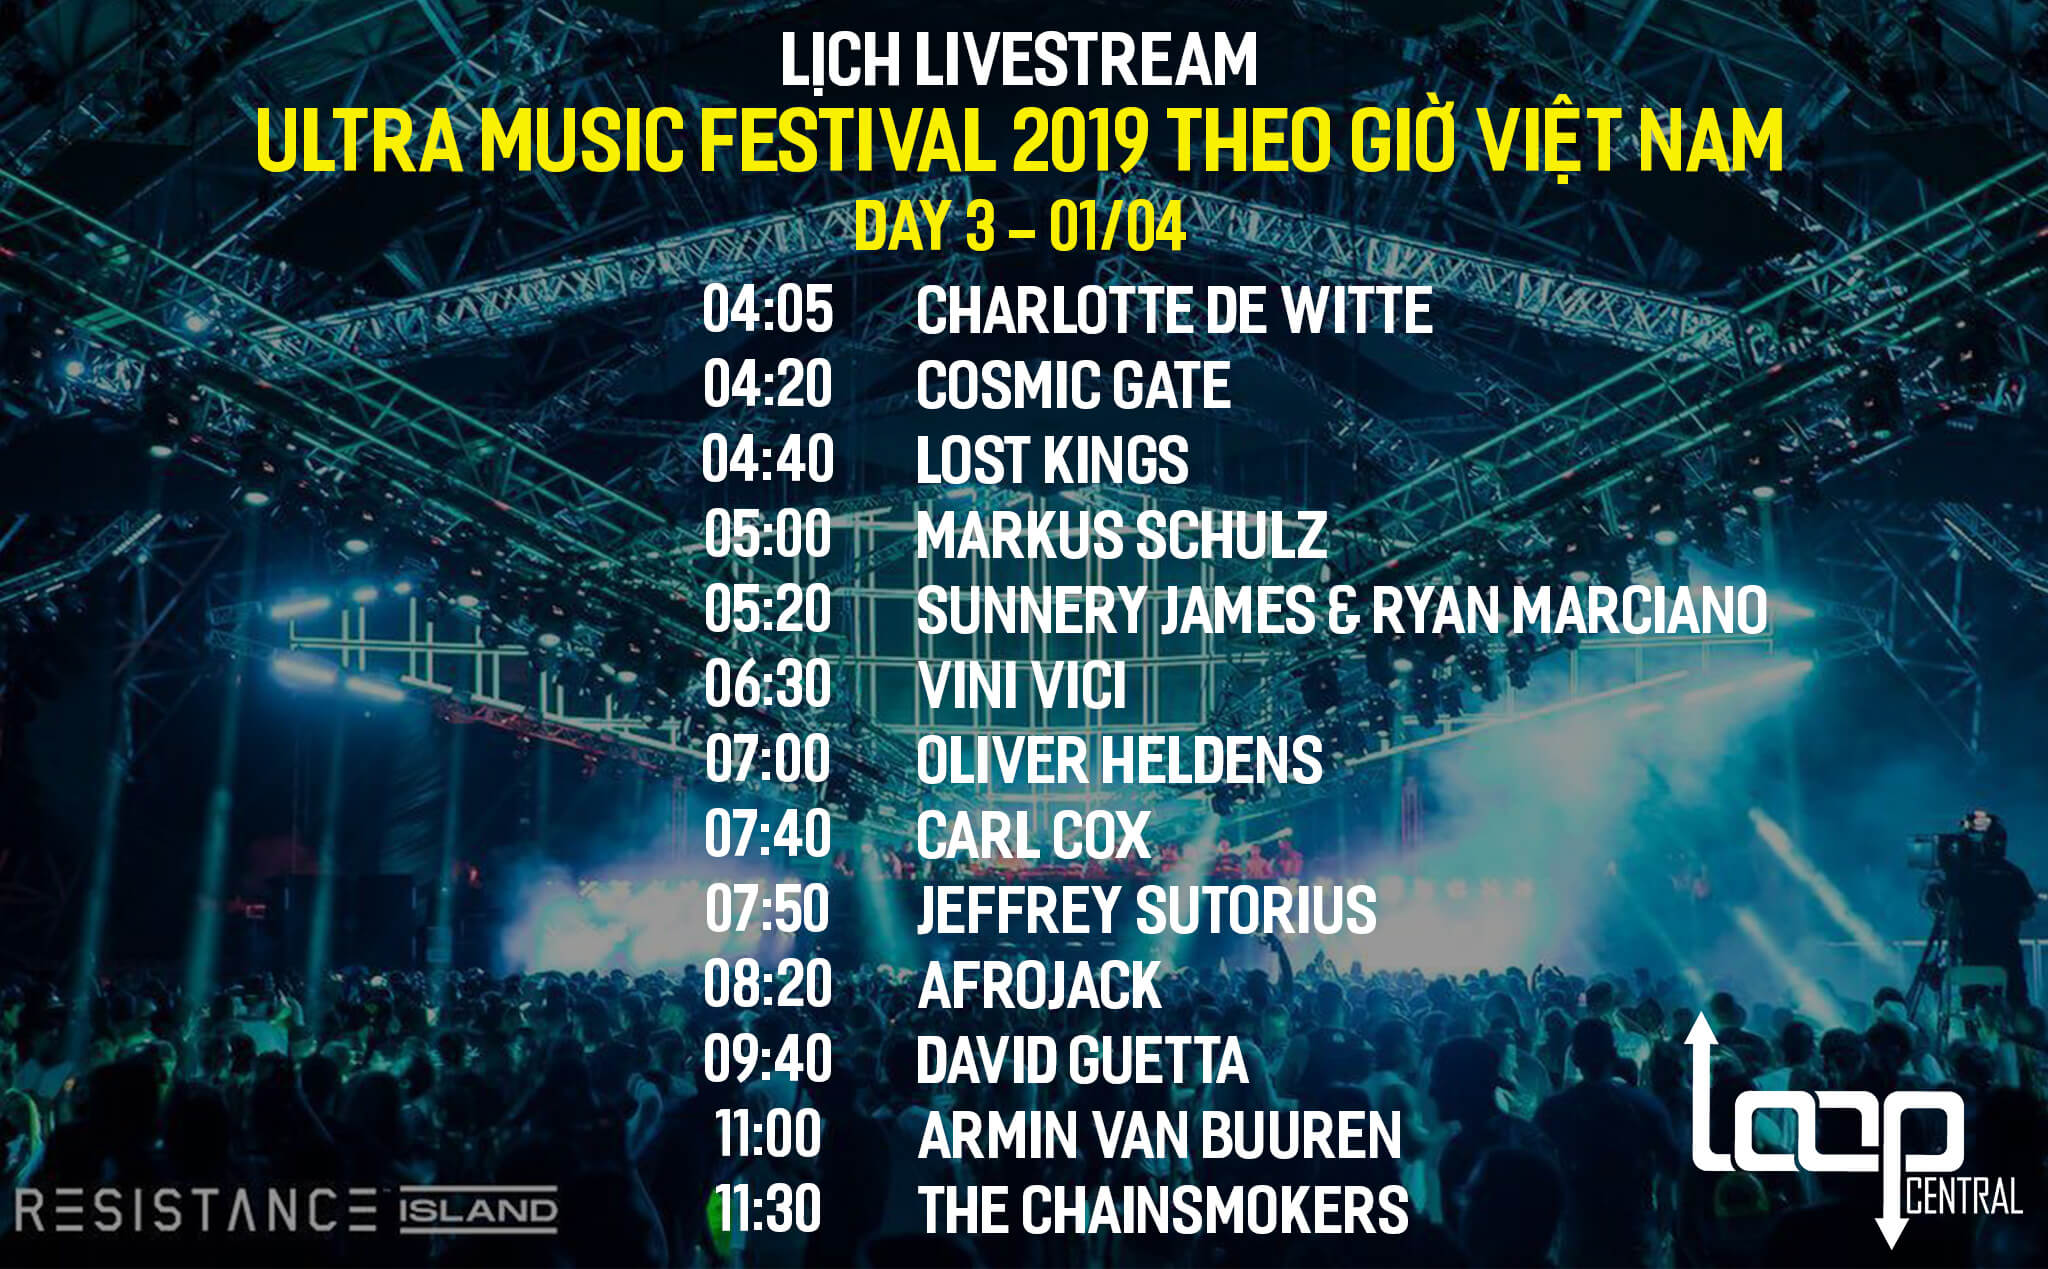 Lịch Livestream Ultra Music Festival 2019 Day 3 Theo Giờ Việt Nam